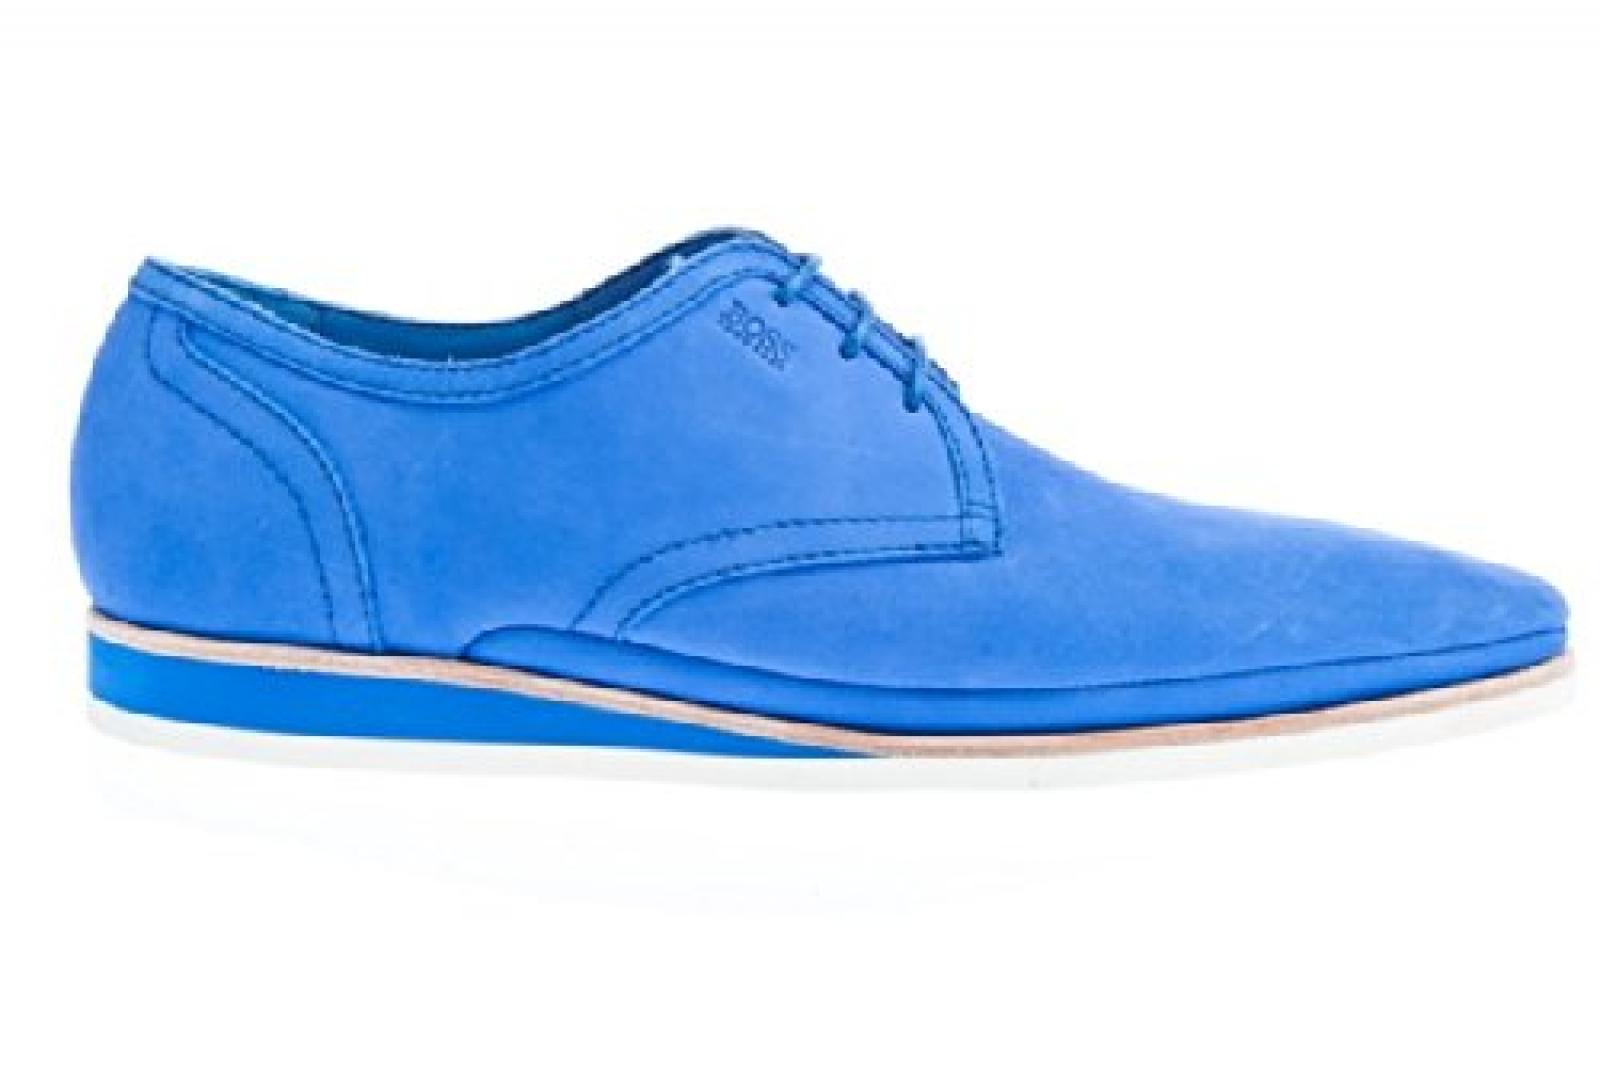 Hugo Boss Eclio Shoe in Blue 